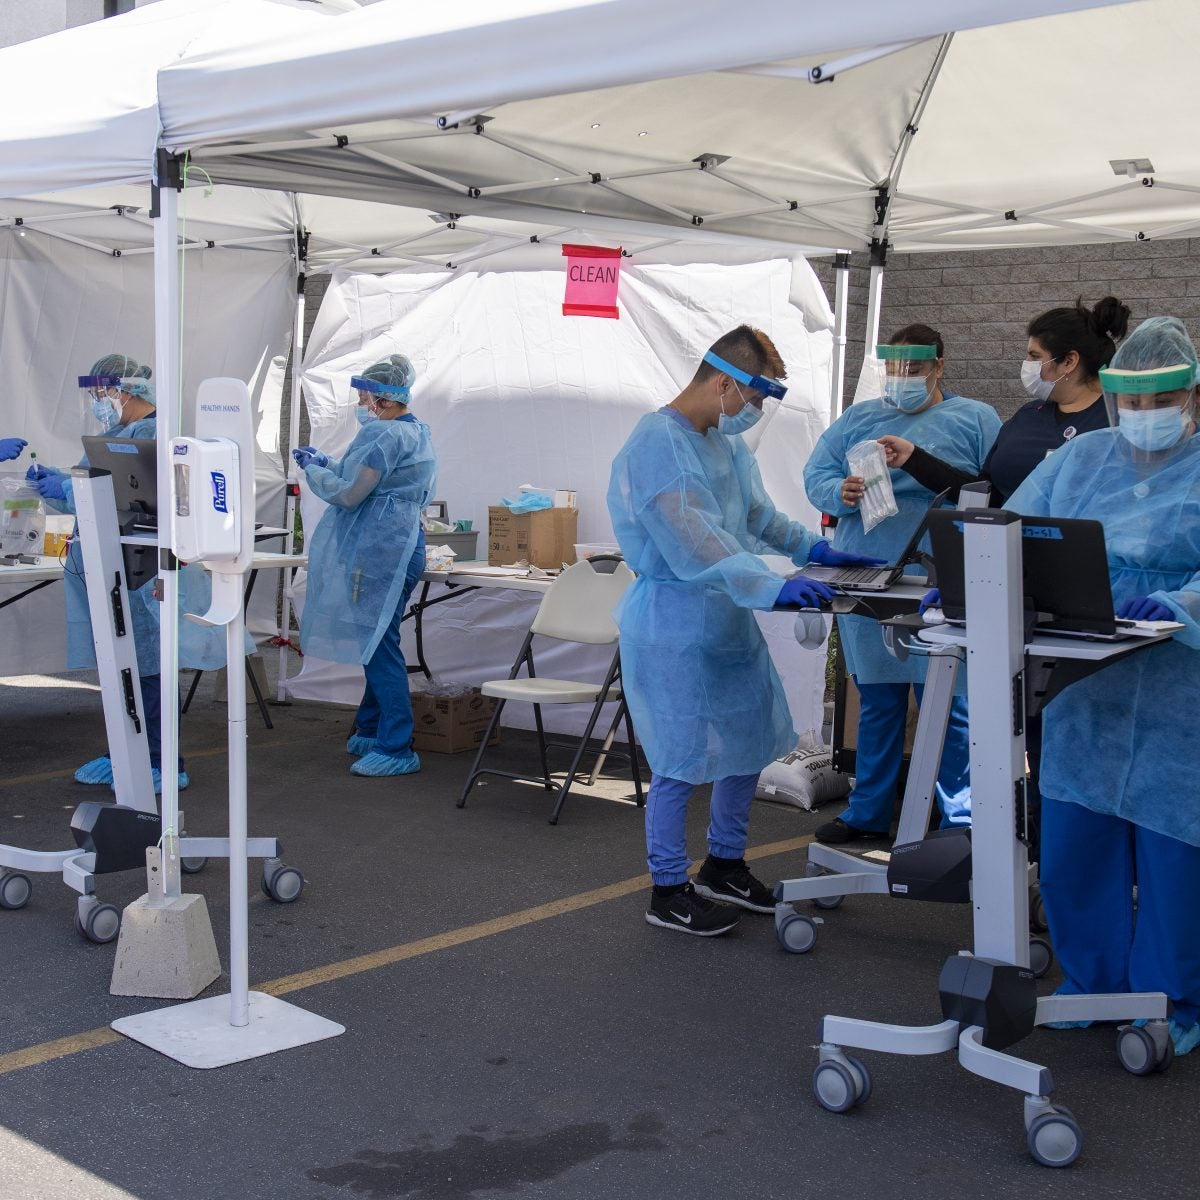 California Had 2 Coronavirus Deaths Before First Reported U.S. Death